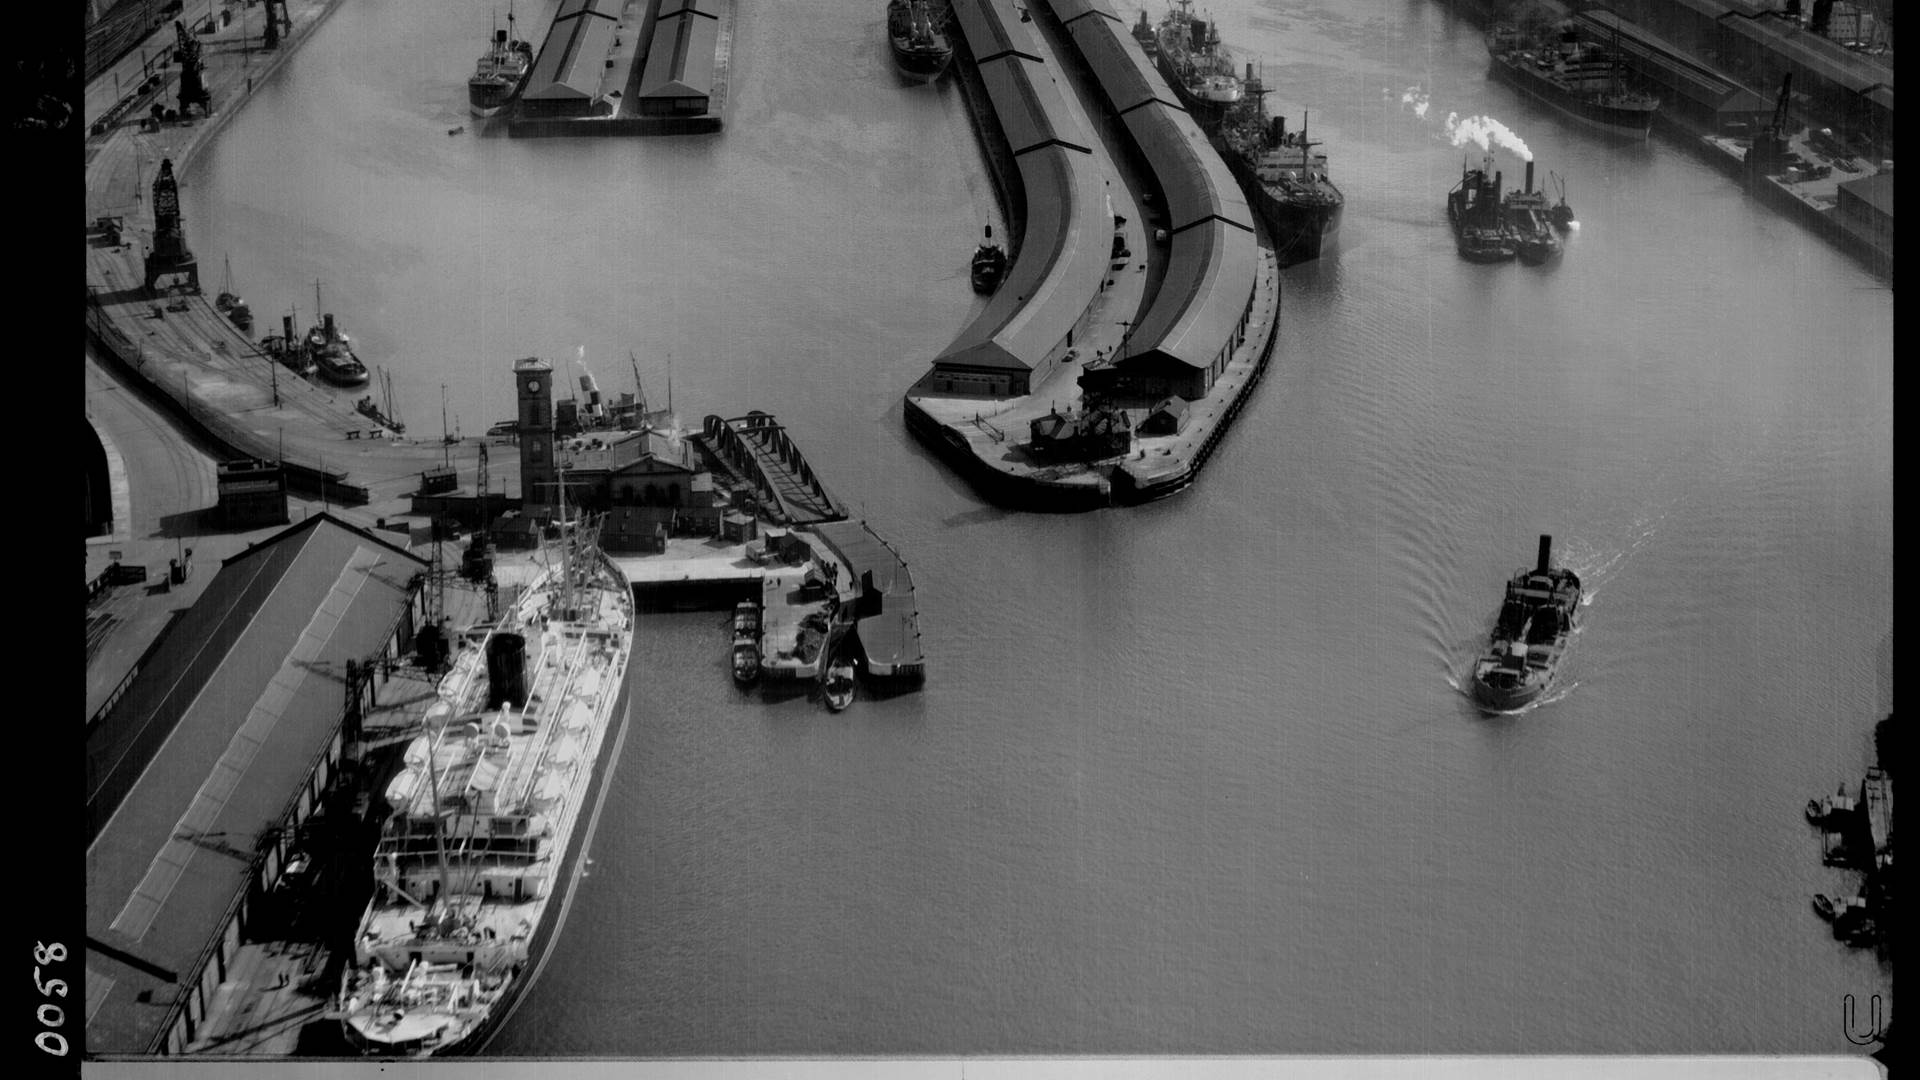 The Queens Dock, Glasgow - historic image